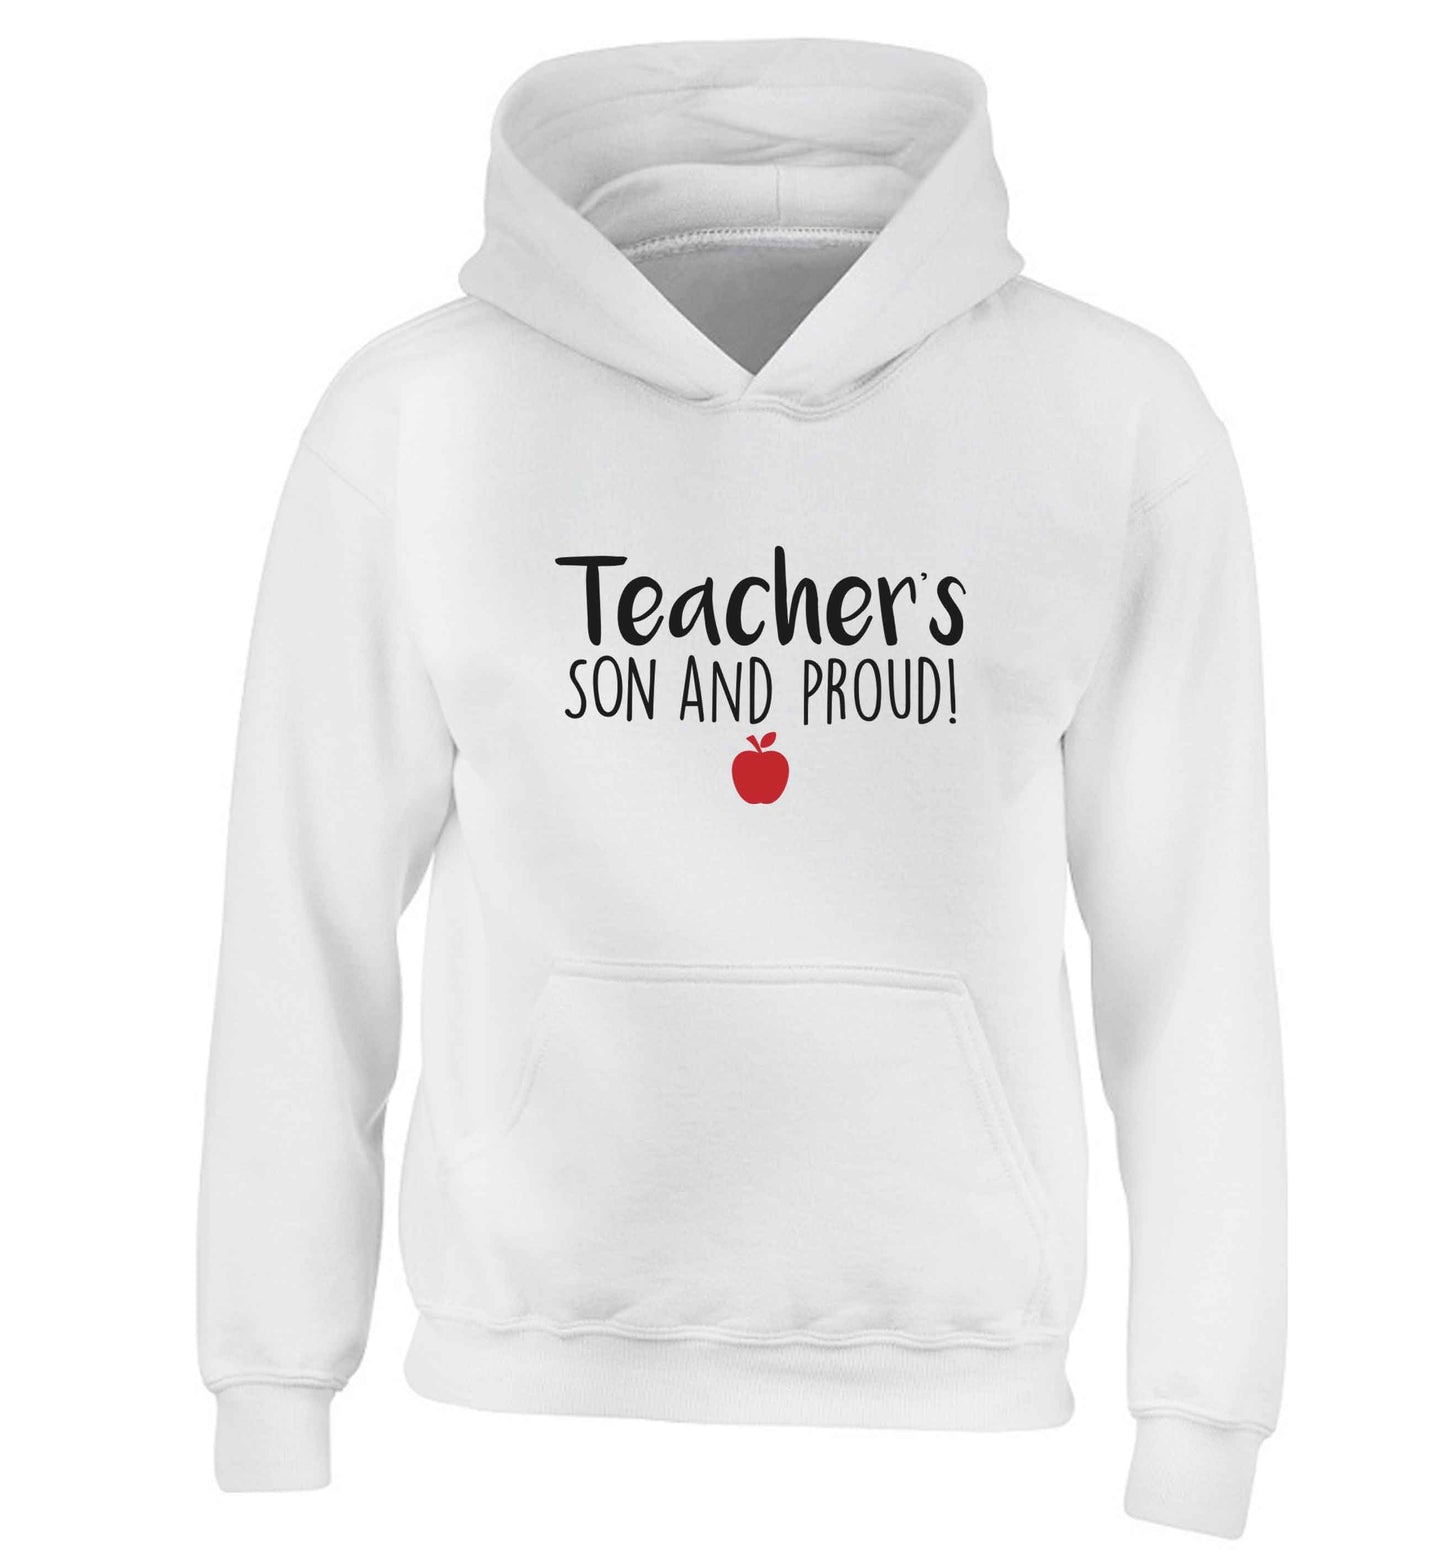 Teachers son and proud children's white hoodie 12-13 Years